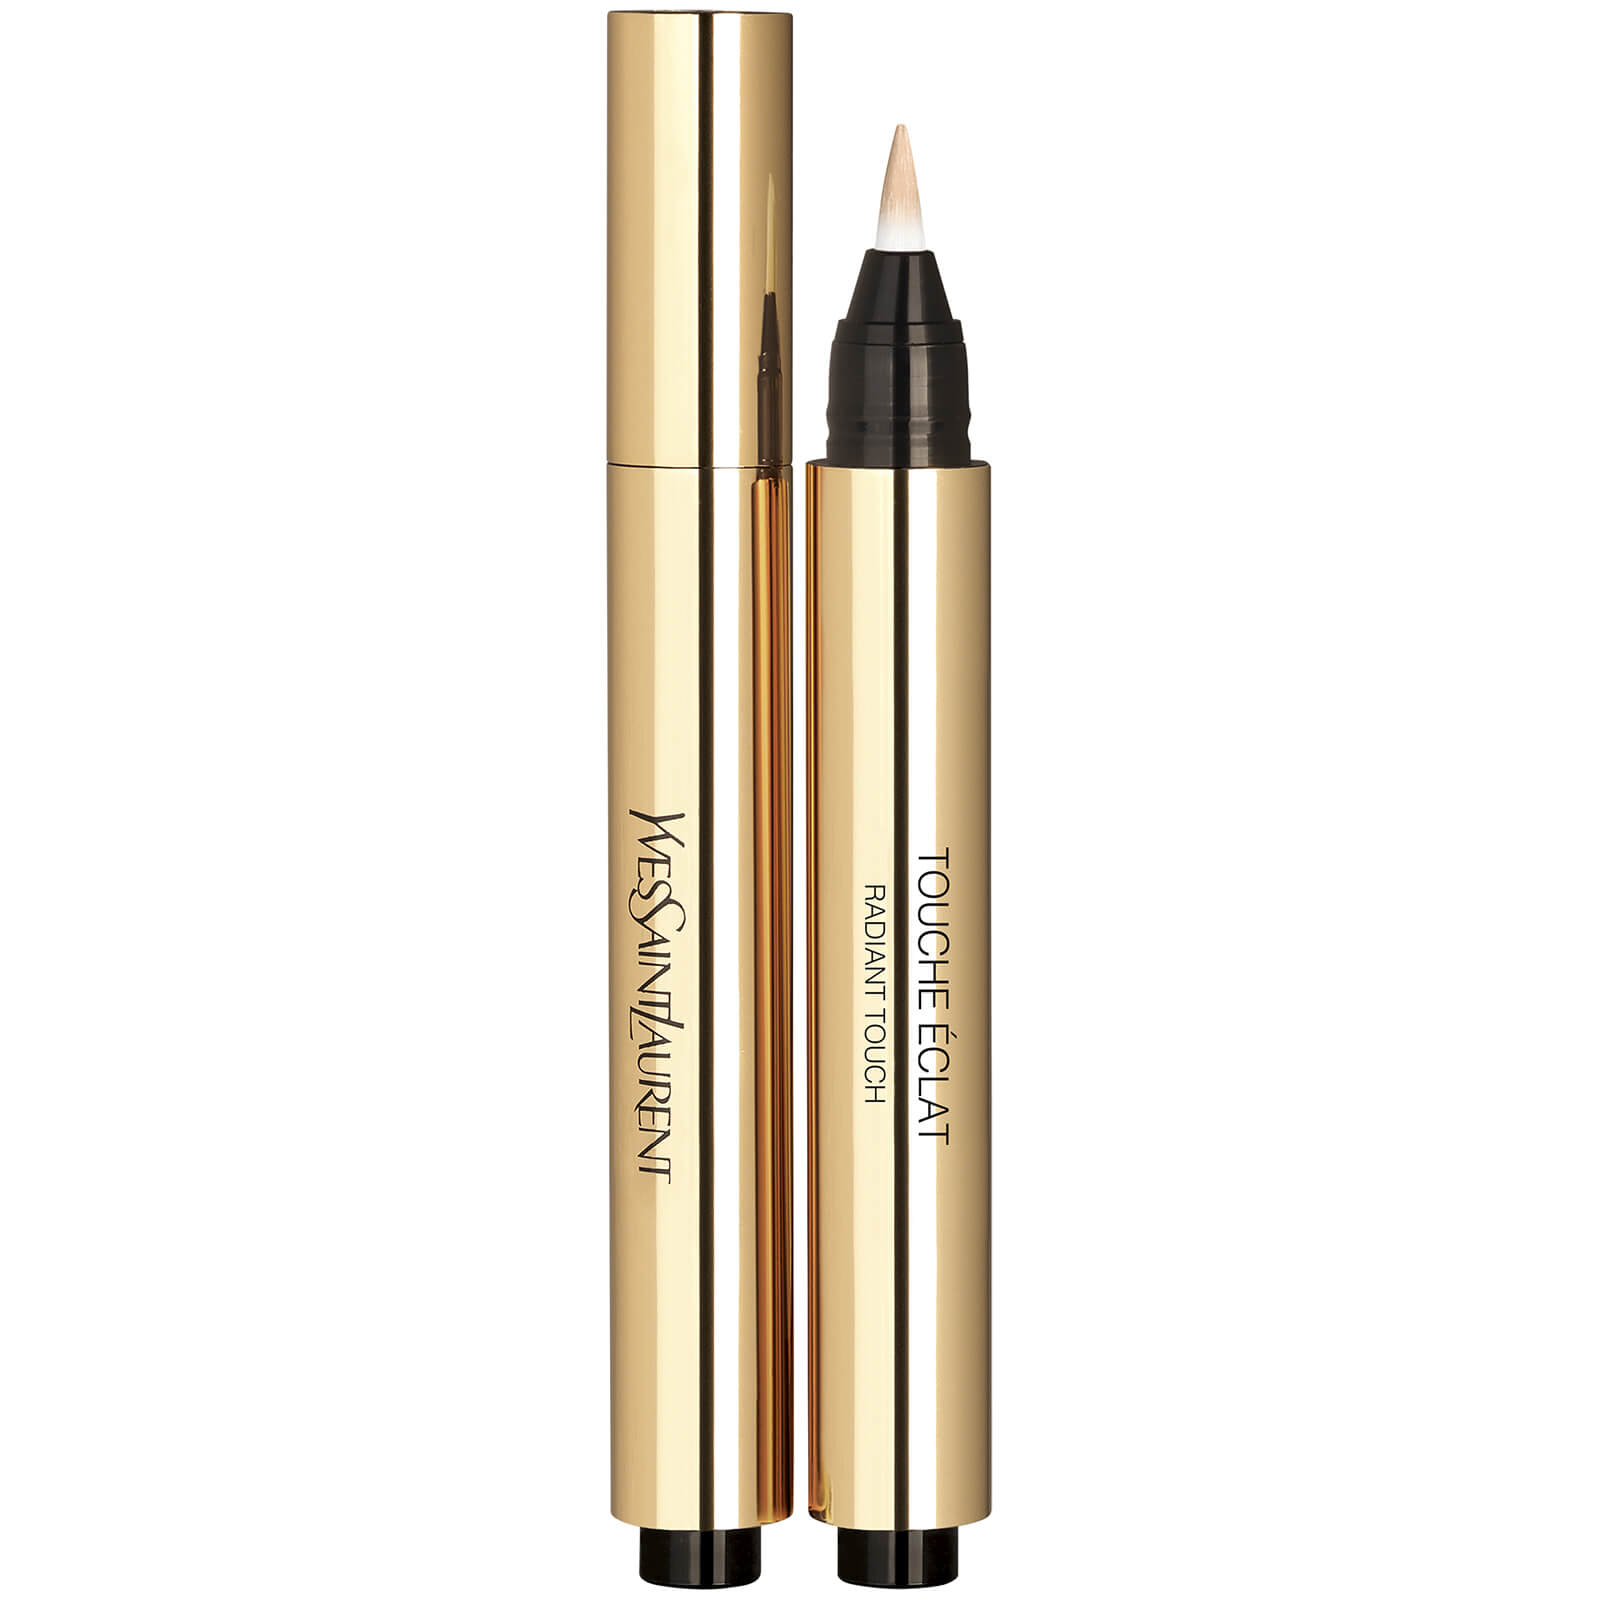 Yves Saint Laurent Touche Eclat Highlighter Pen 2.5ml (Various Shades) - 2.5 Luminous Vanilla